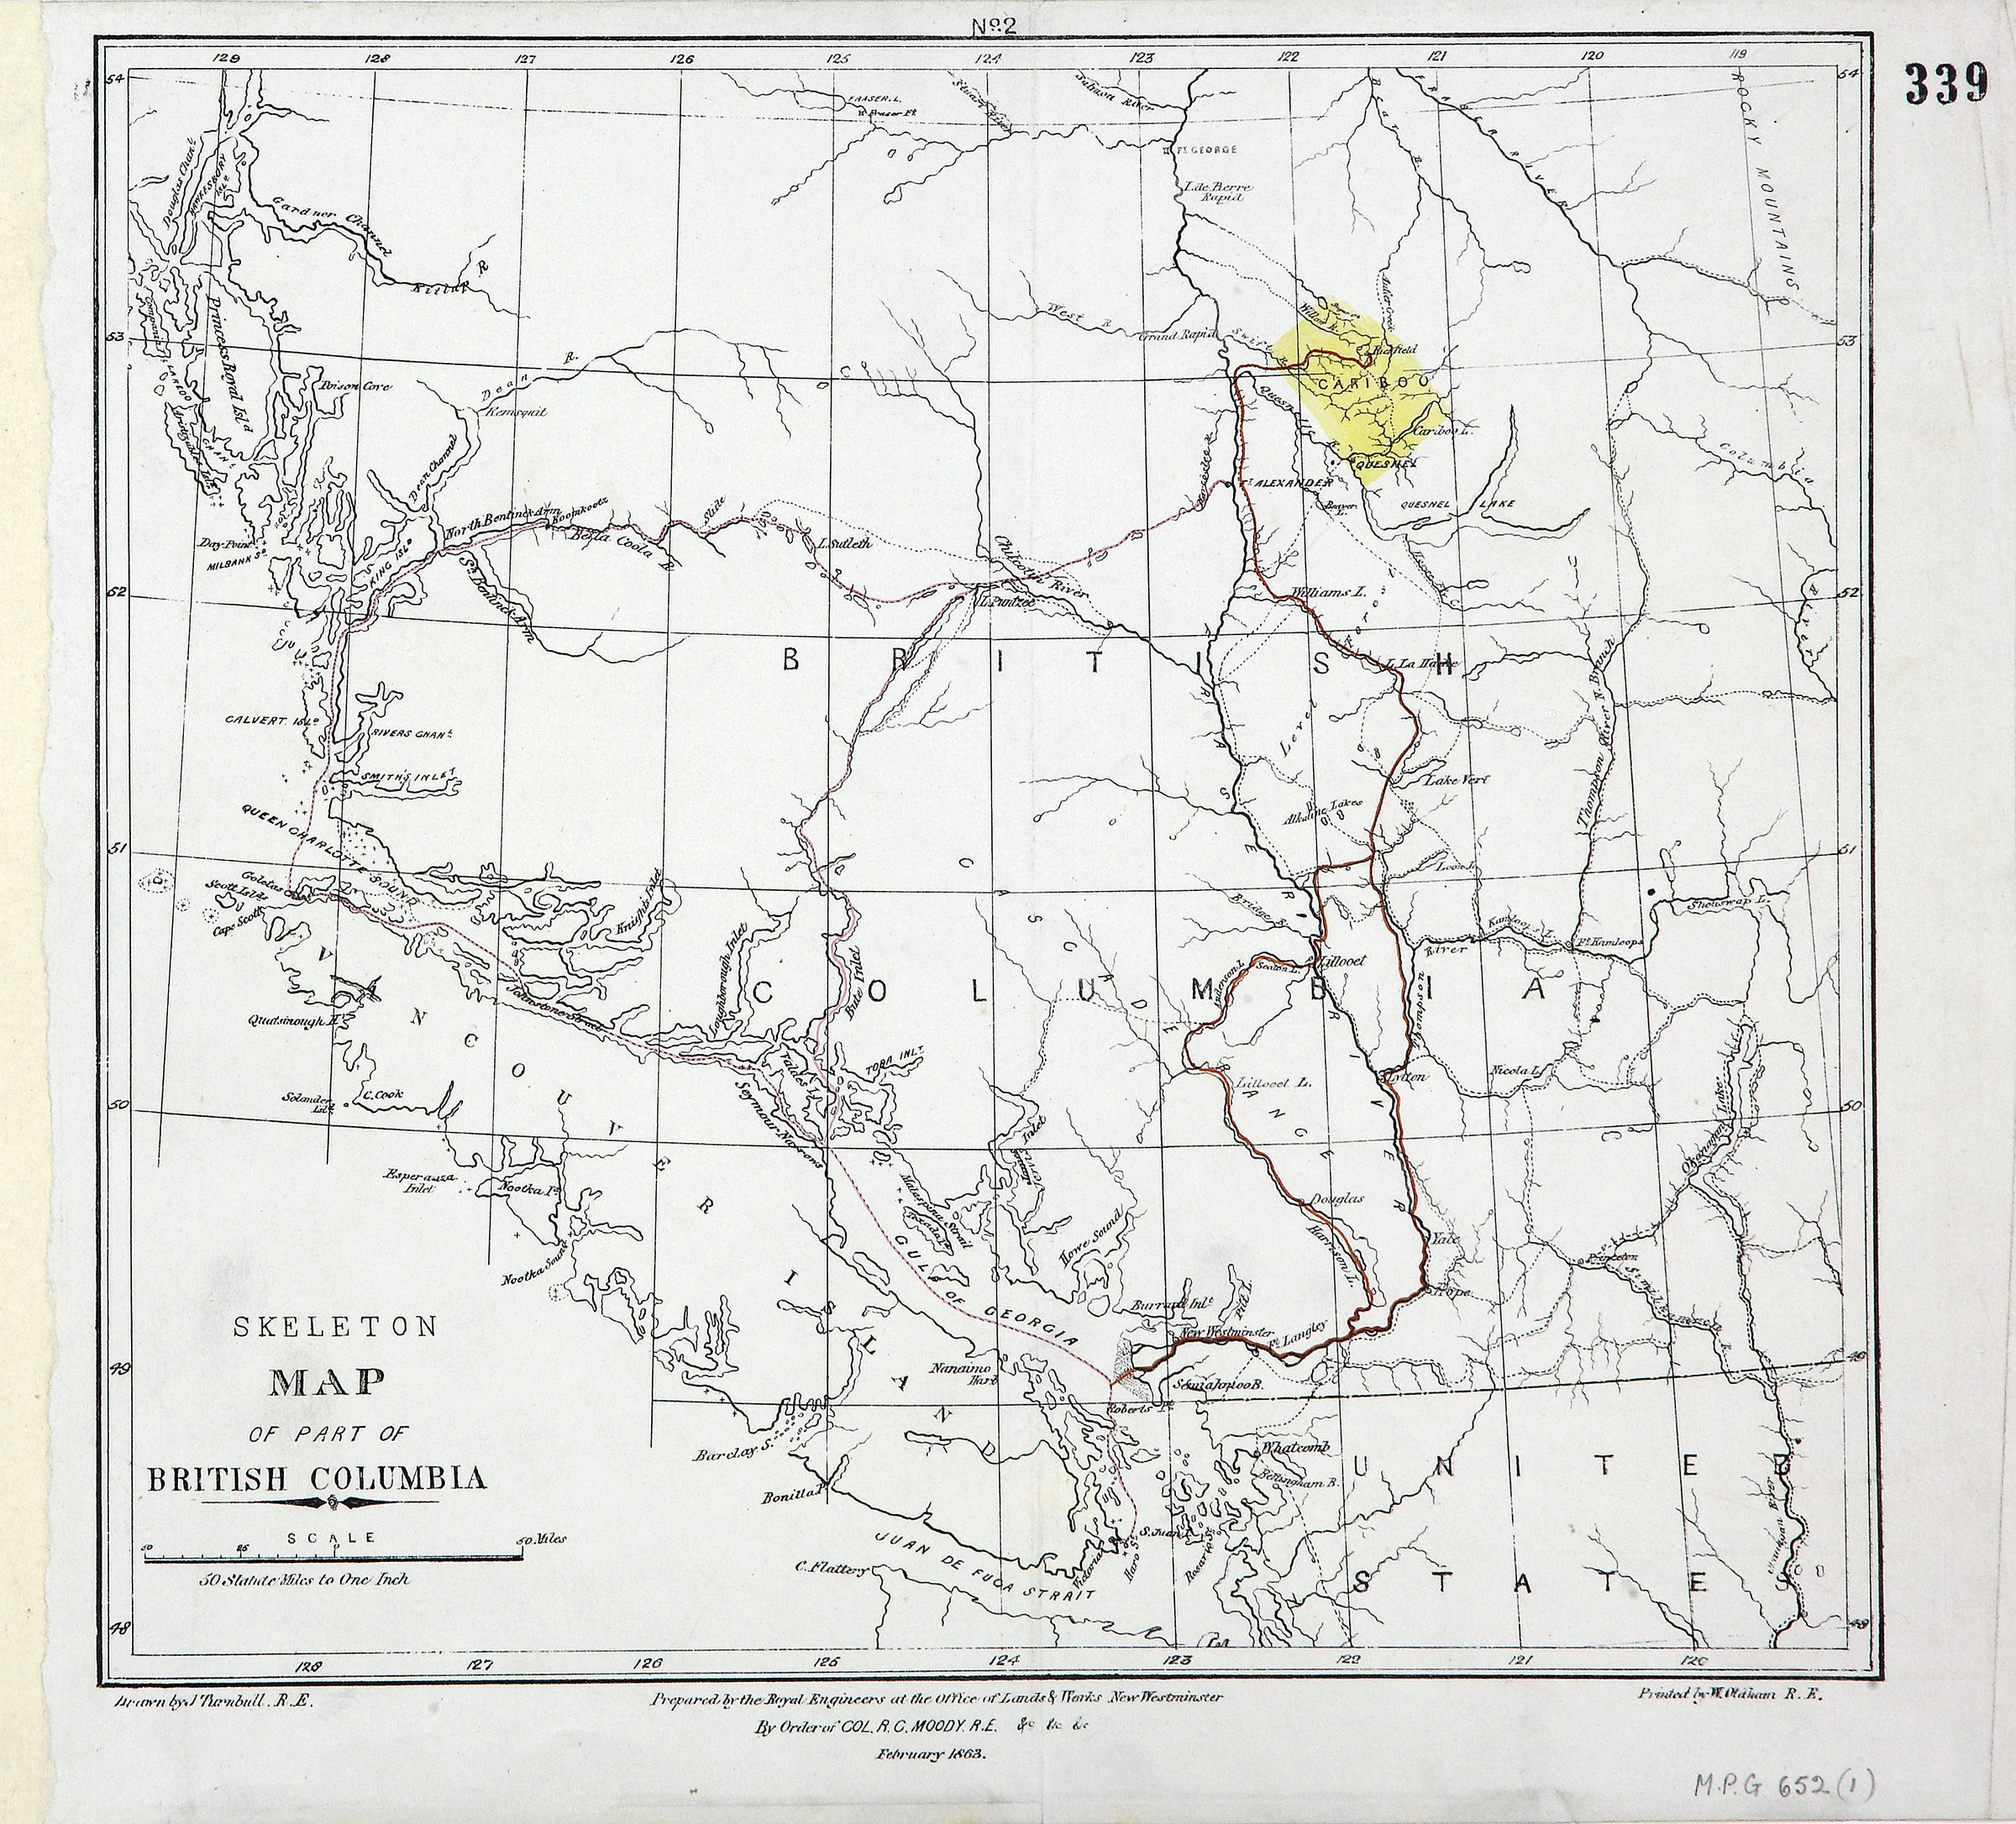 Skeleton map of part of British Columbia.